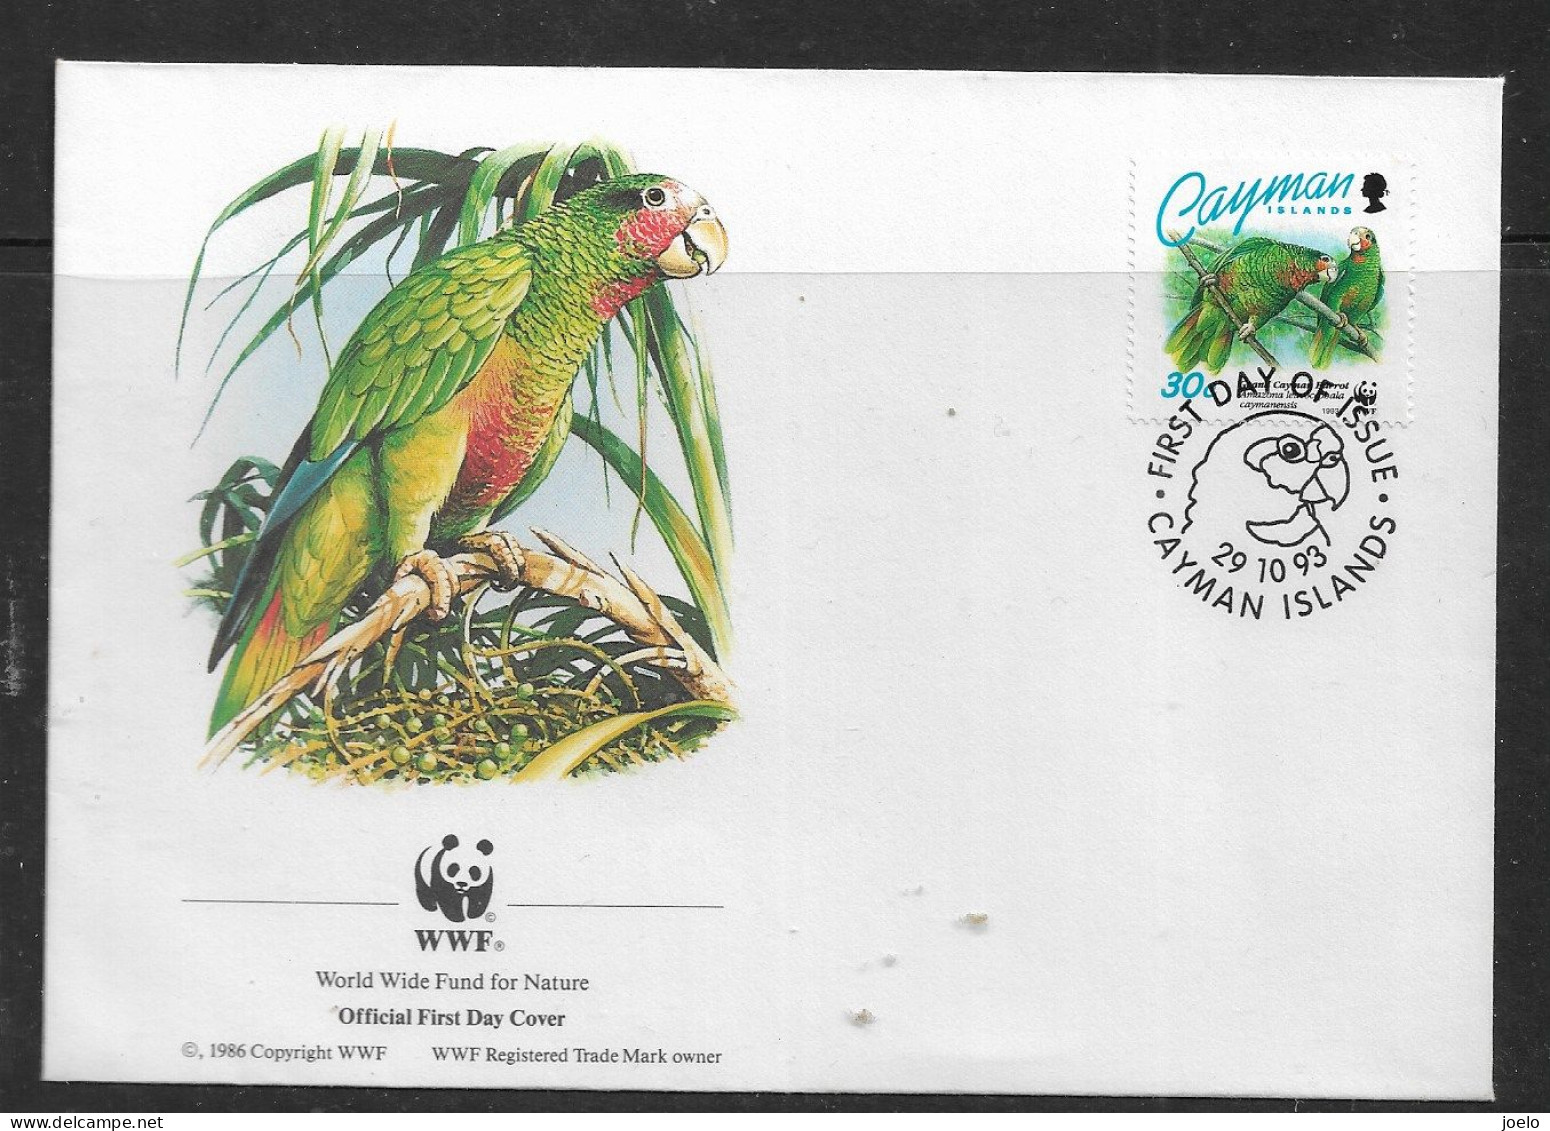 CAYMAN ISLAND 1993 PARROTS WWF FDC - Cayman Islands